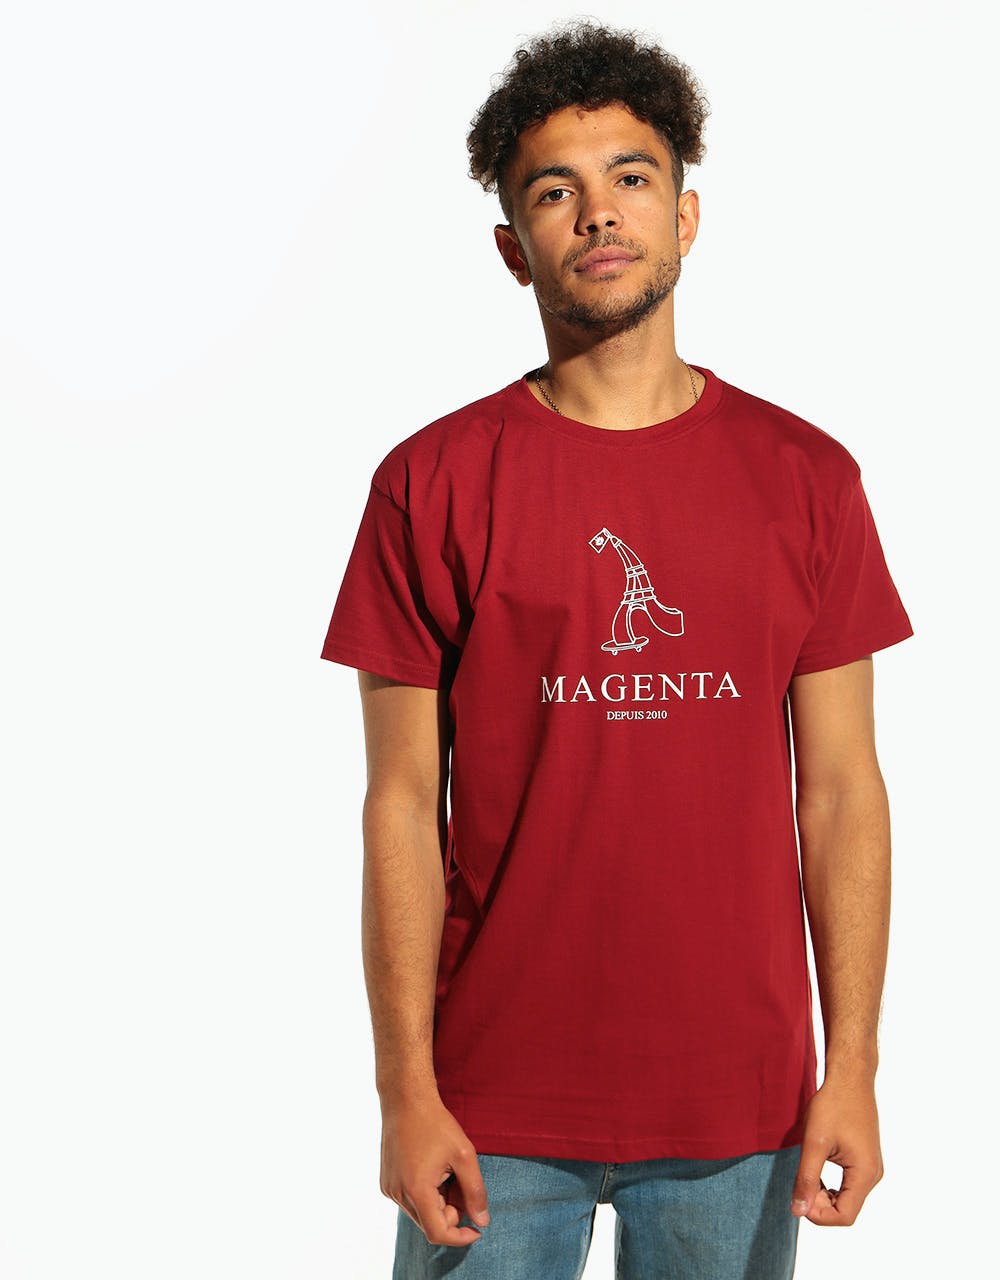 Magenta Depuis 2010 'Ten Year Collection' T-Shirt - Burgundy